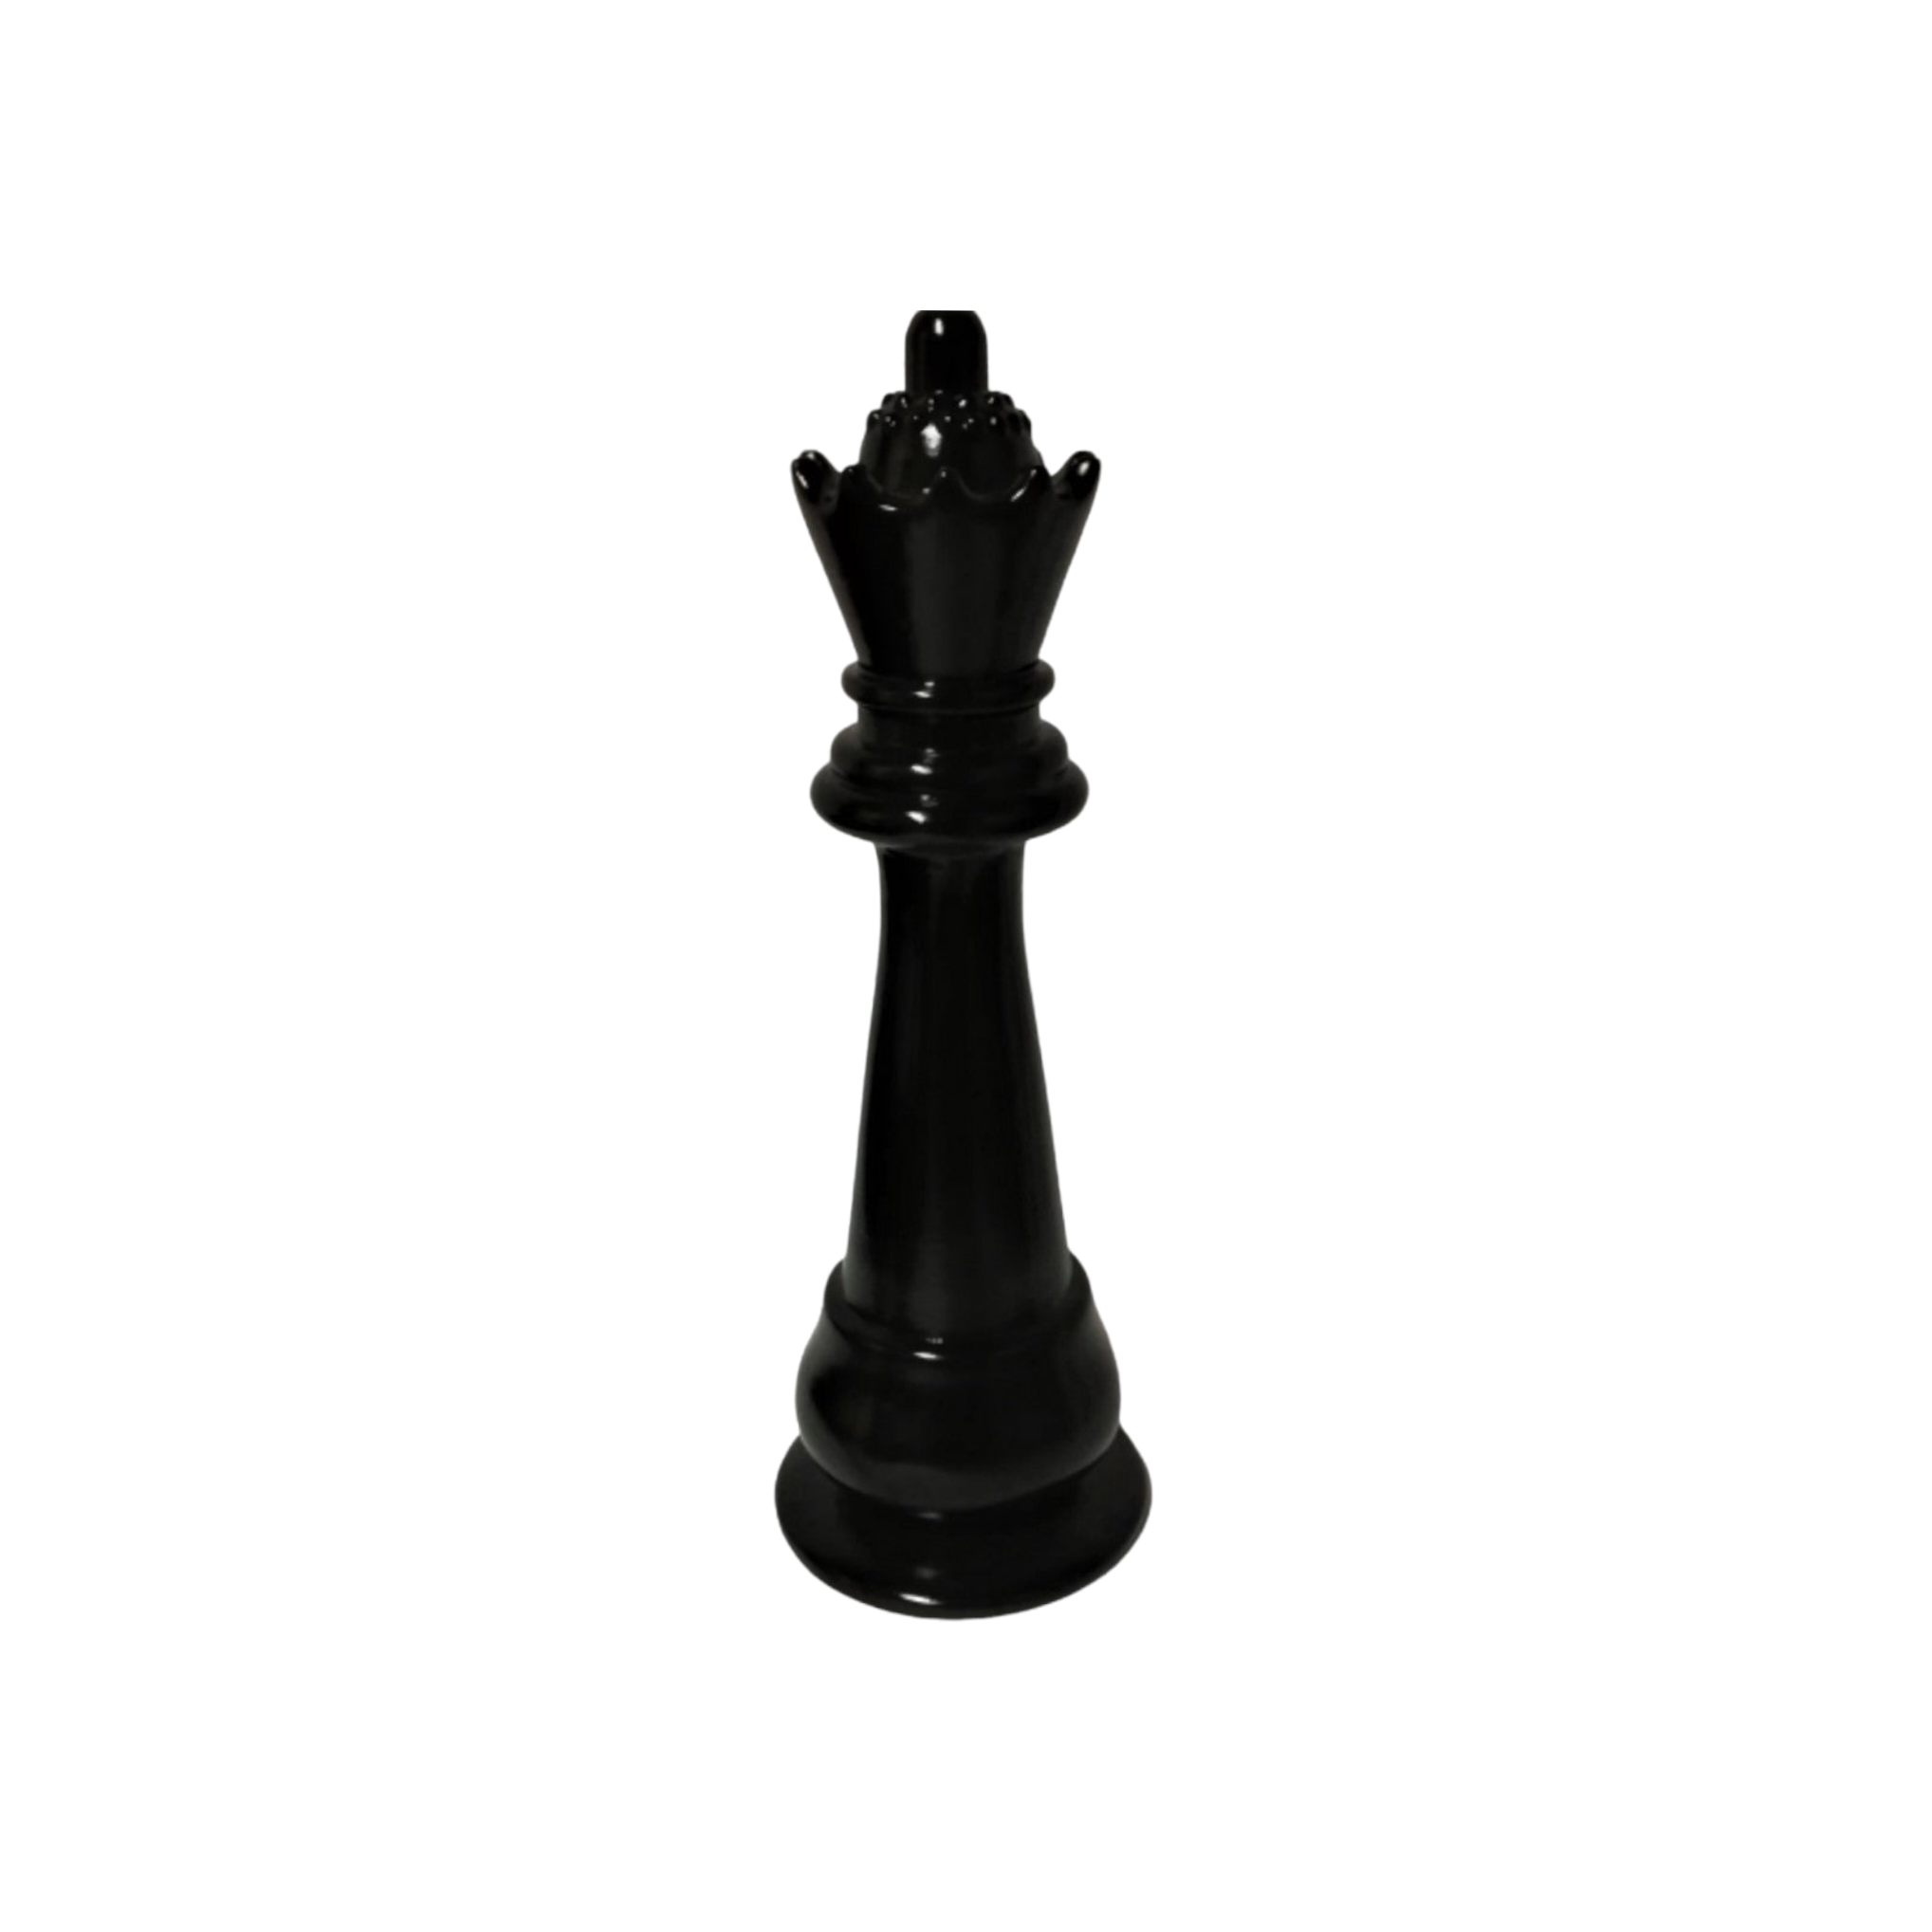 King Decor 42cm Chess Base Black